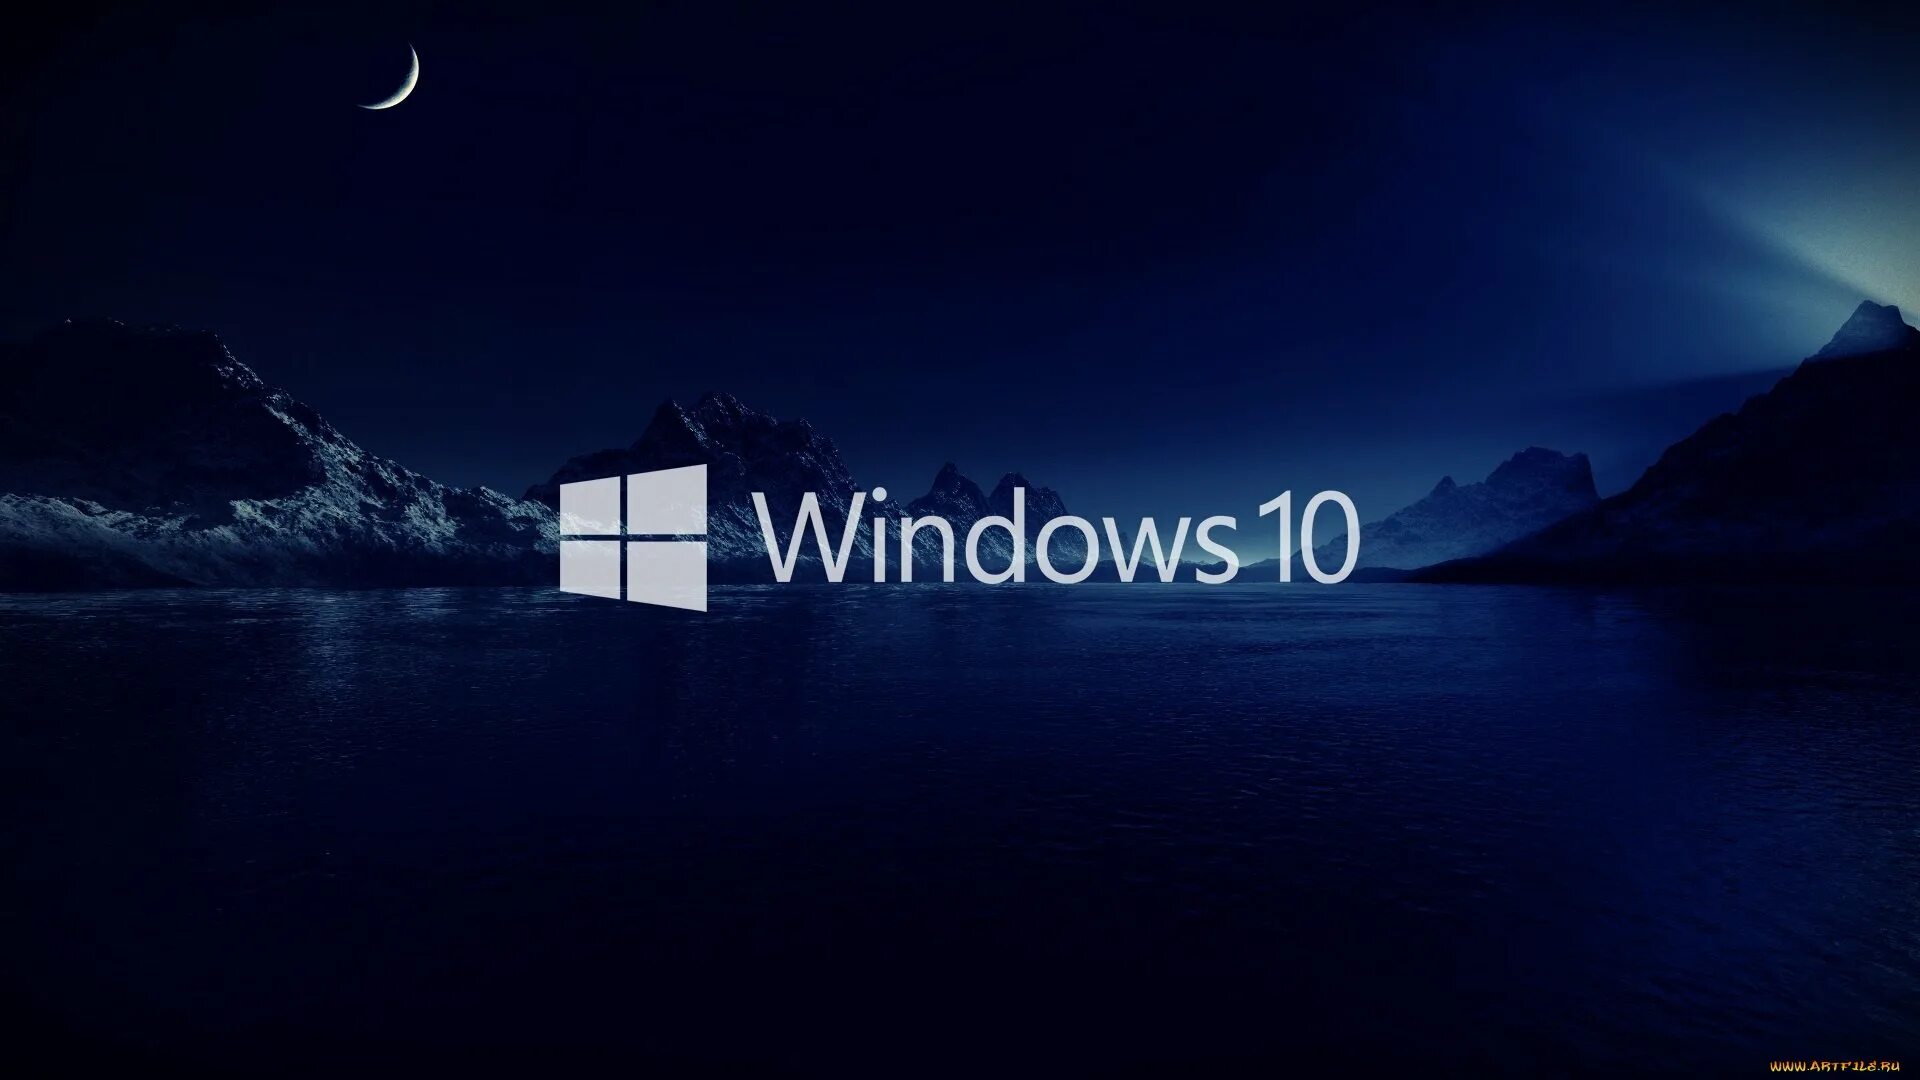 Windows 10 av. Виндокюус 10. Заставка виндовс 10. Картинки Windows 10. Фоновое изображение Windows 10.